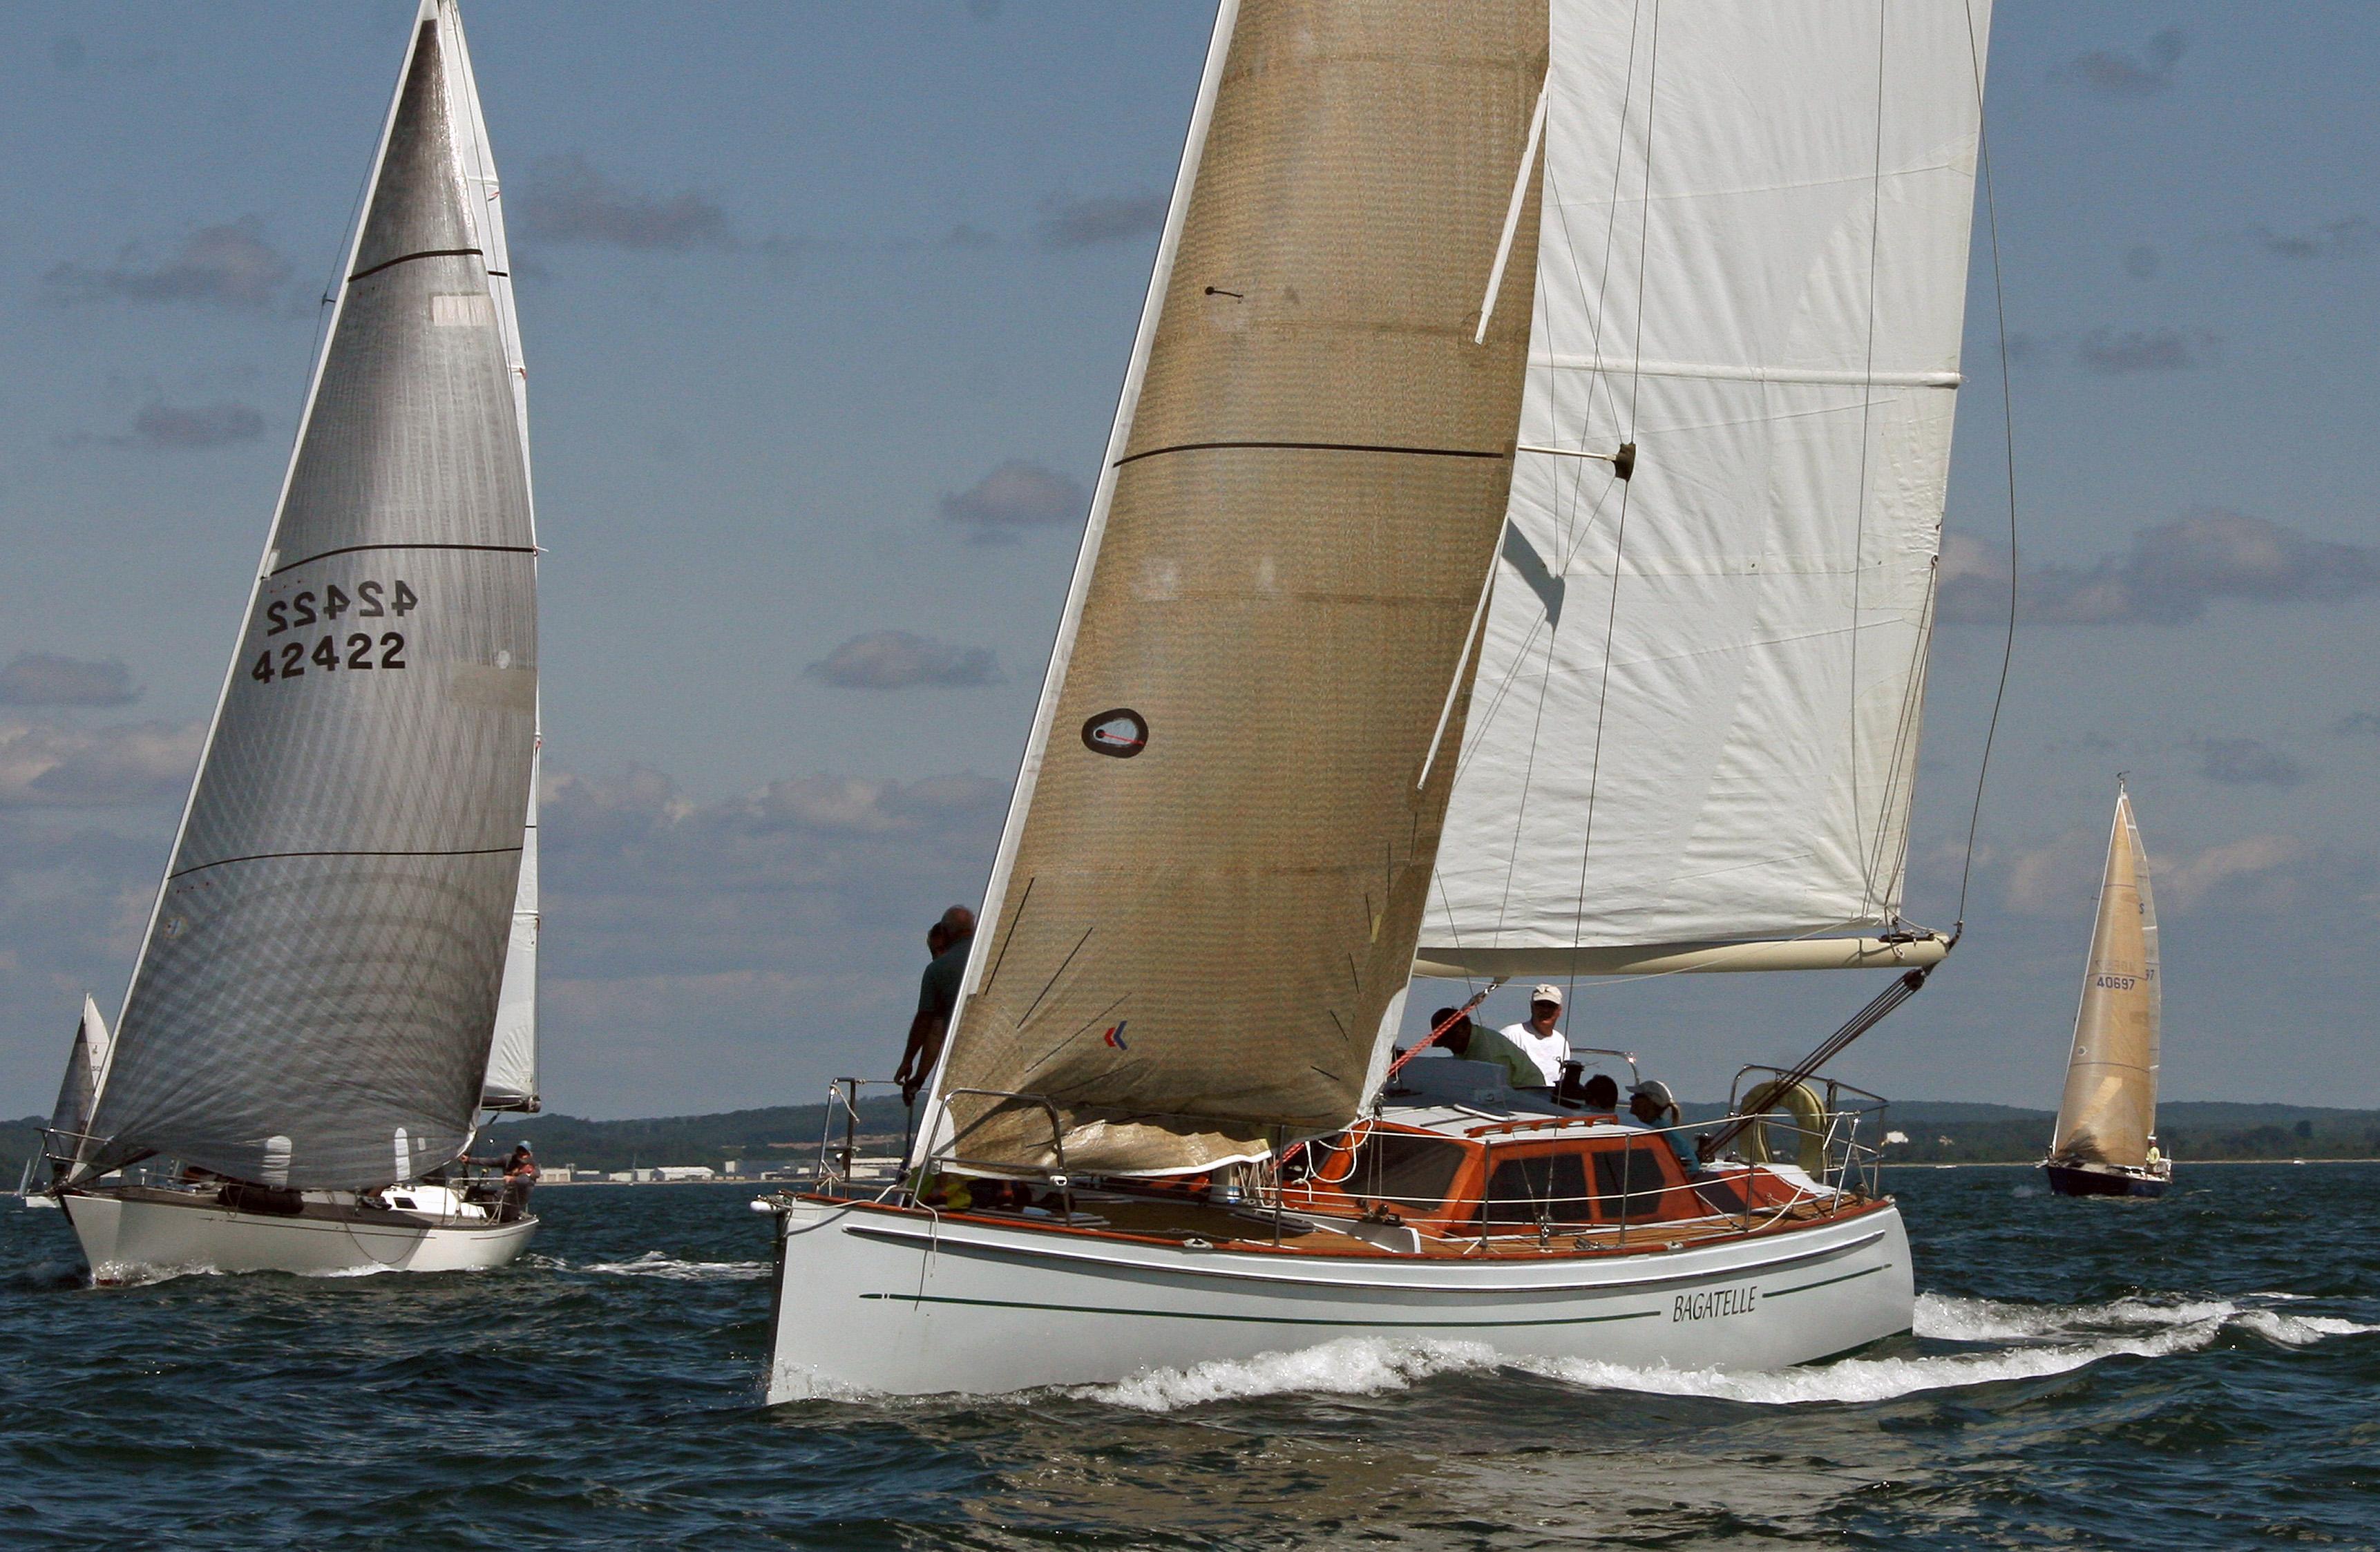 bluenose yacht sales & quality brokerage boston